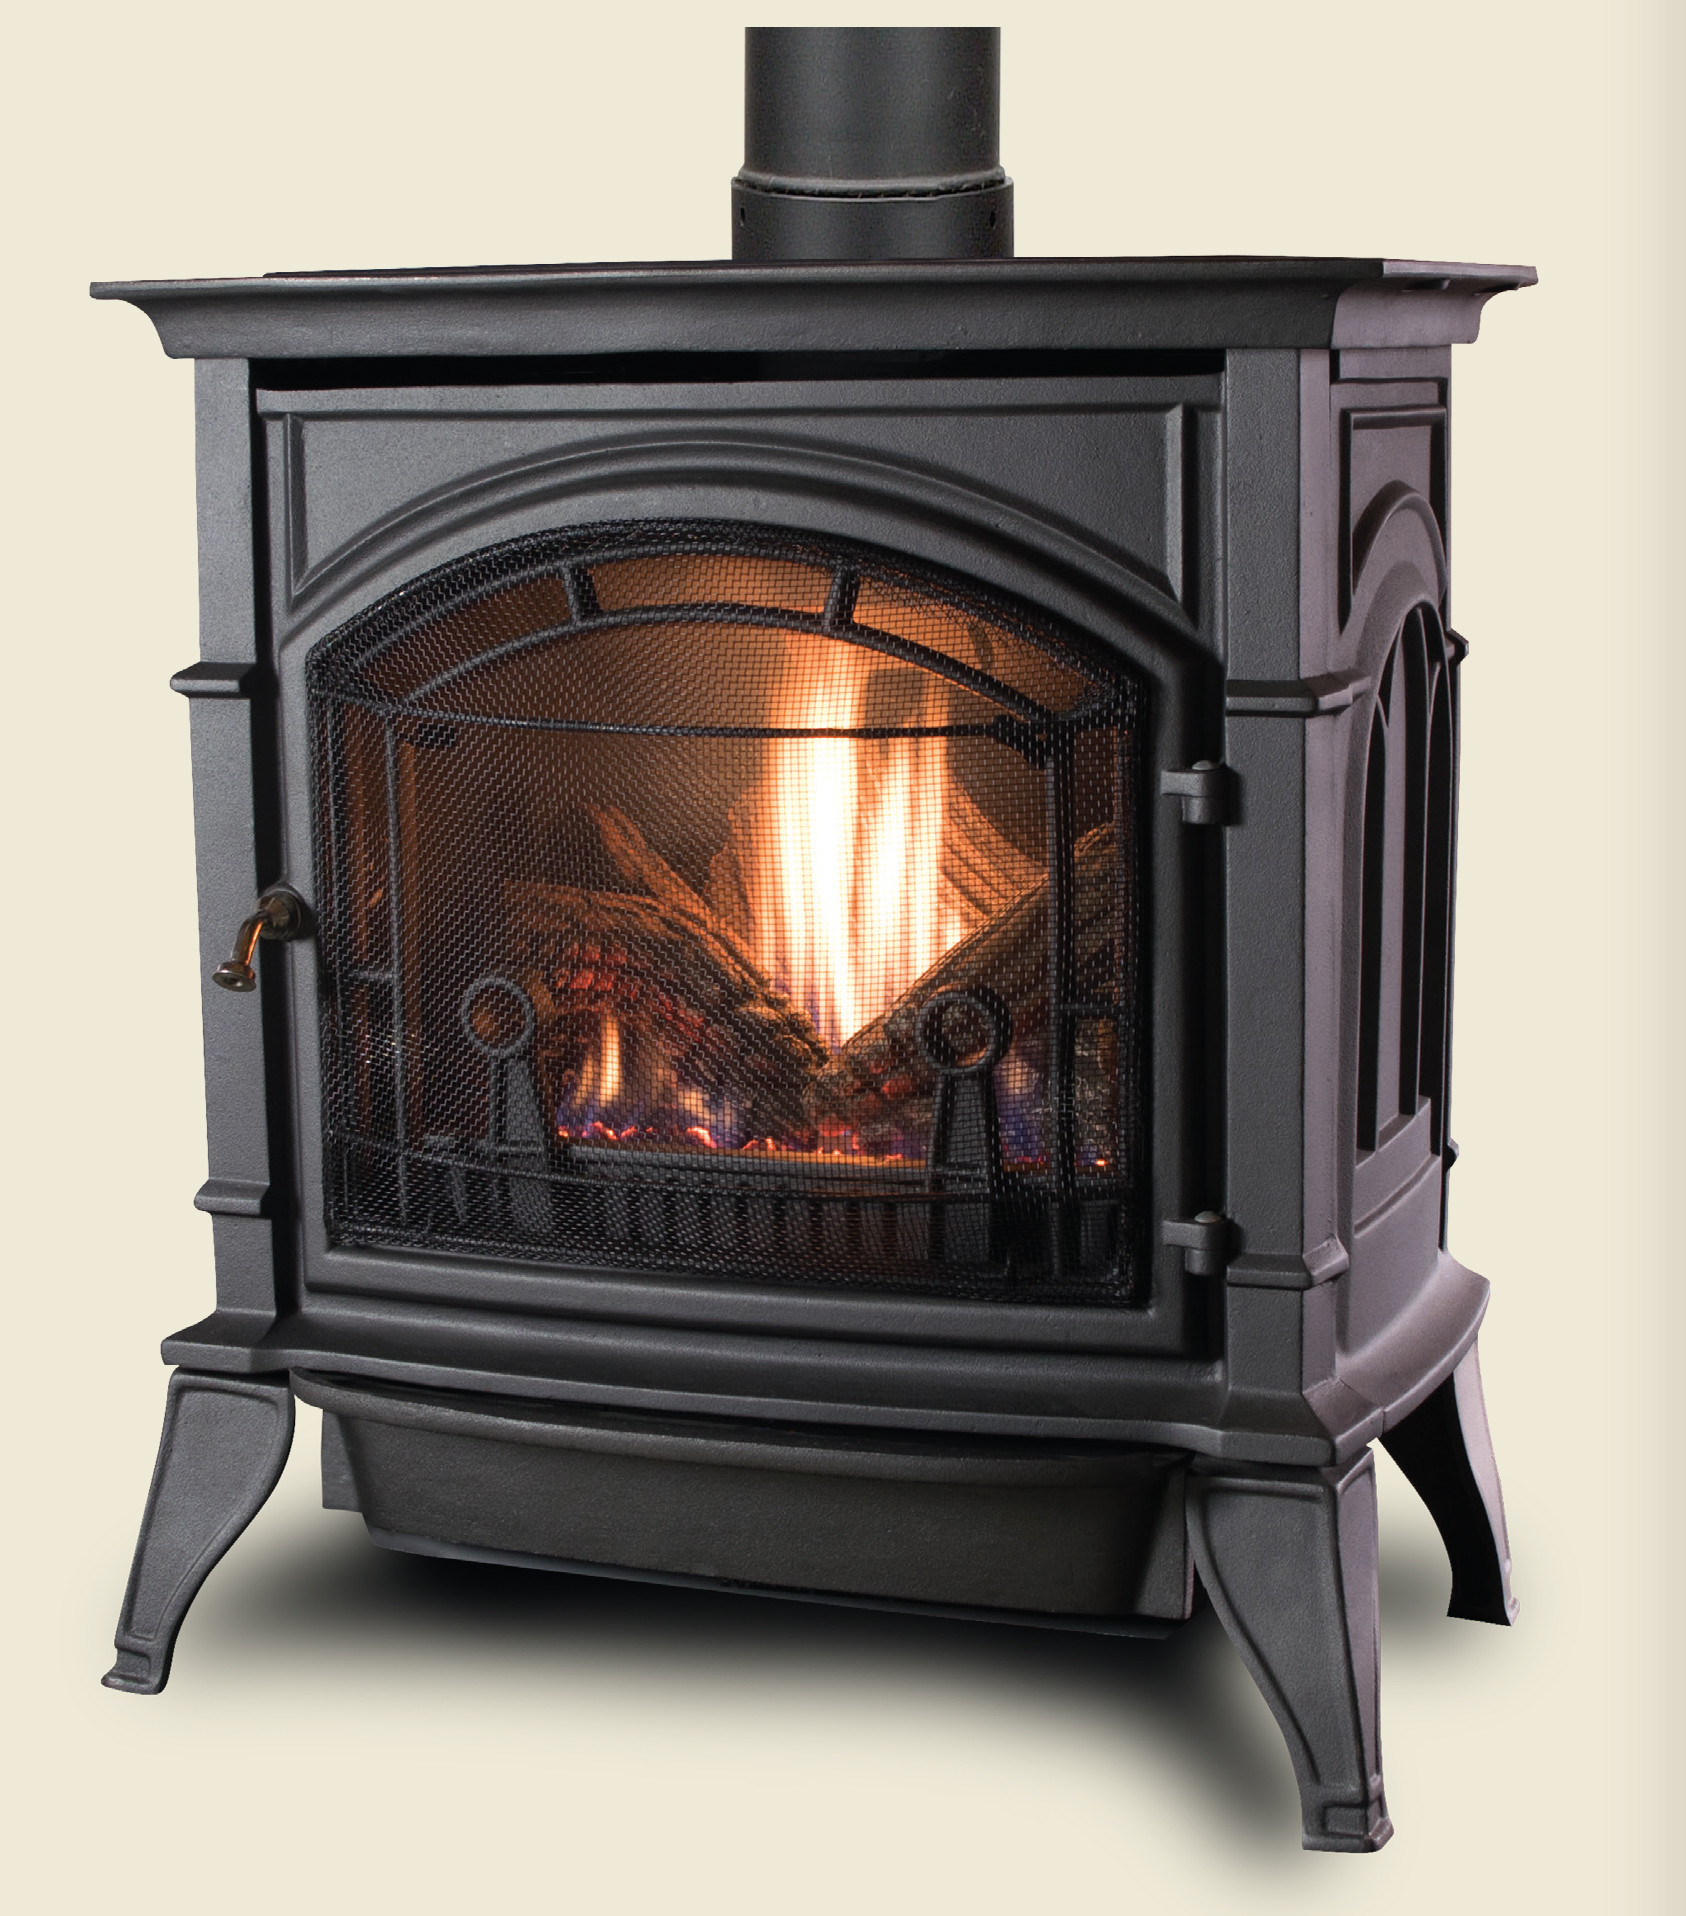 Best ideas about Gas Fireplace Stove
. Save or Pin CSDV30SPVGSL Majestic Cast CSDV30SPVGSL Single Door Now.